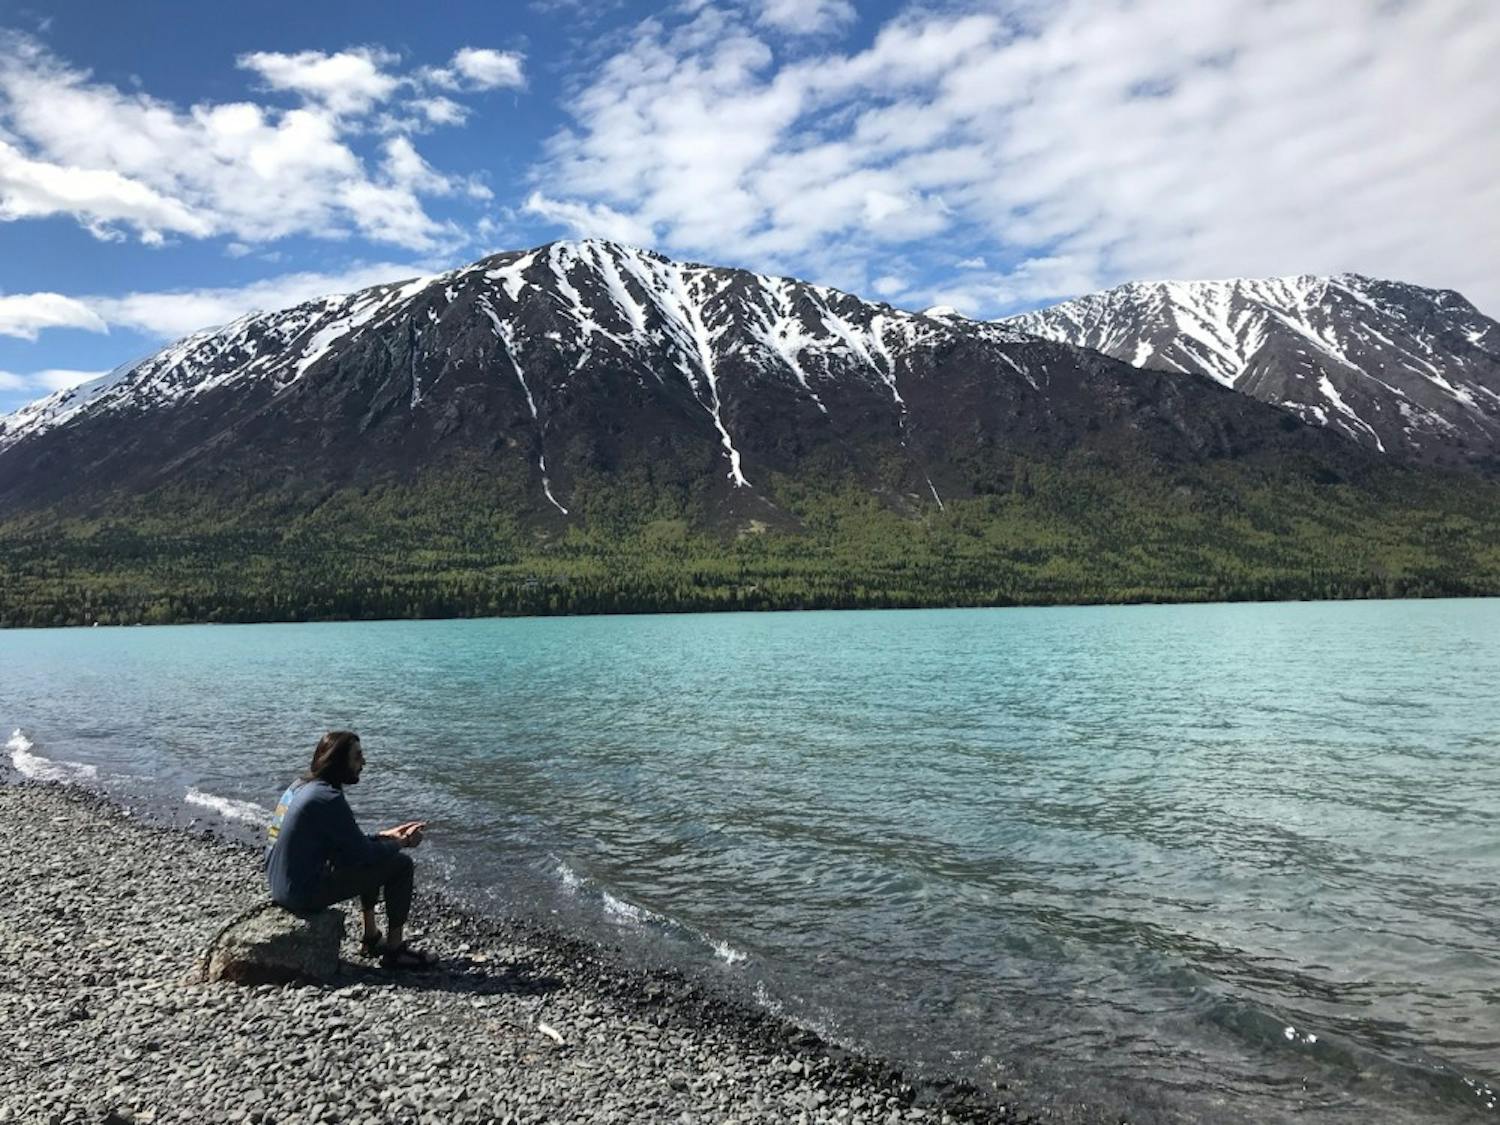 Senior news editor Max Kalnitz looks out on Kenai Lake, part of the Kenai Peninsula on Alaska's southern coast.